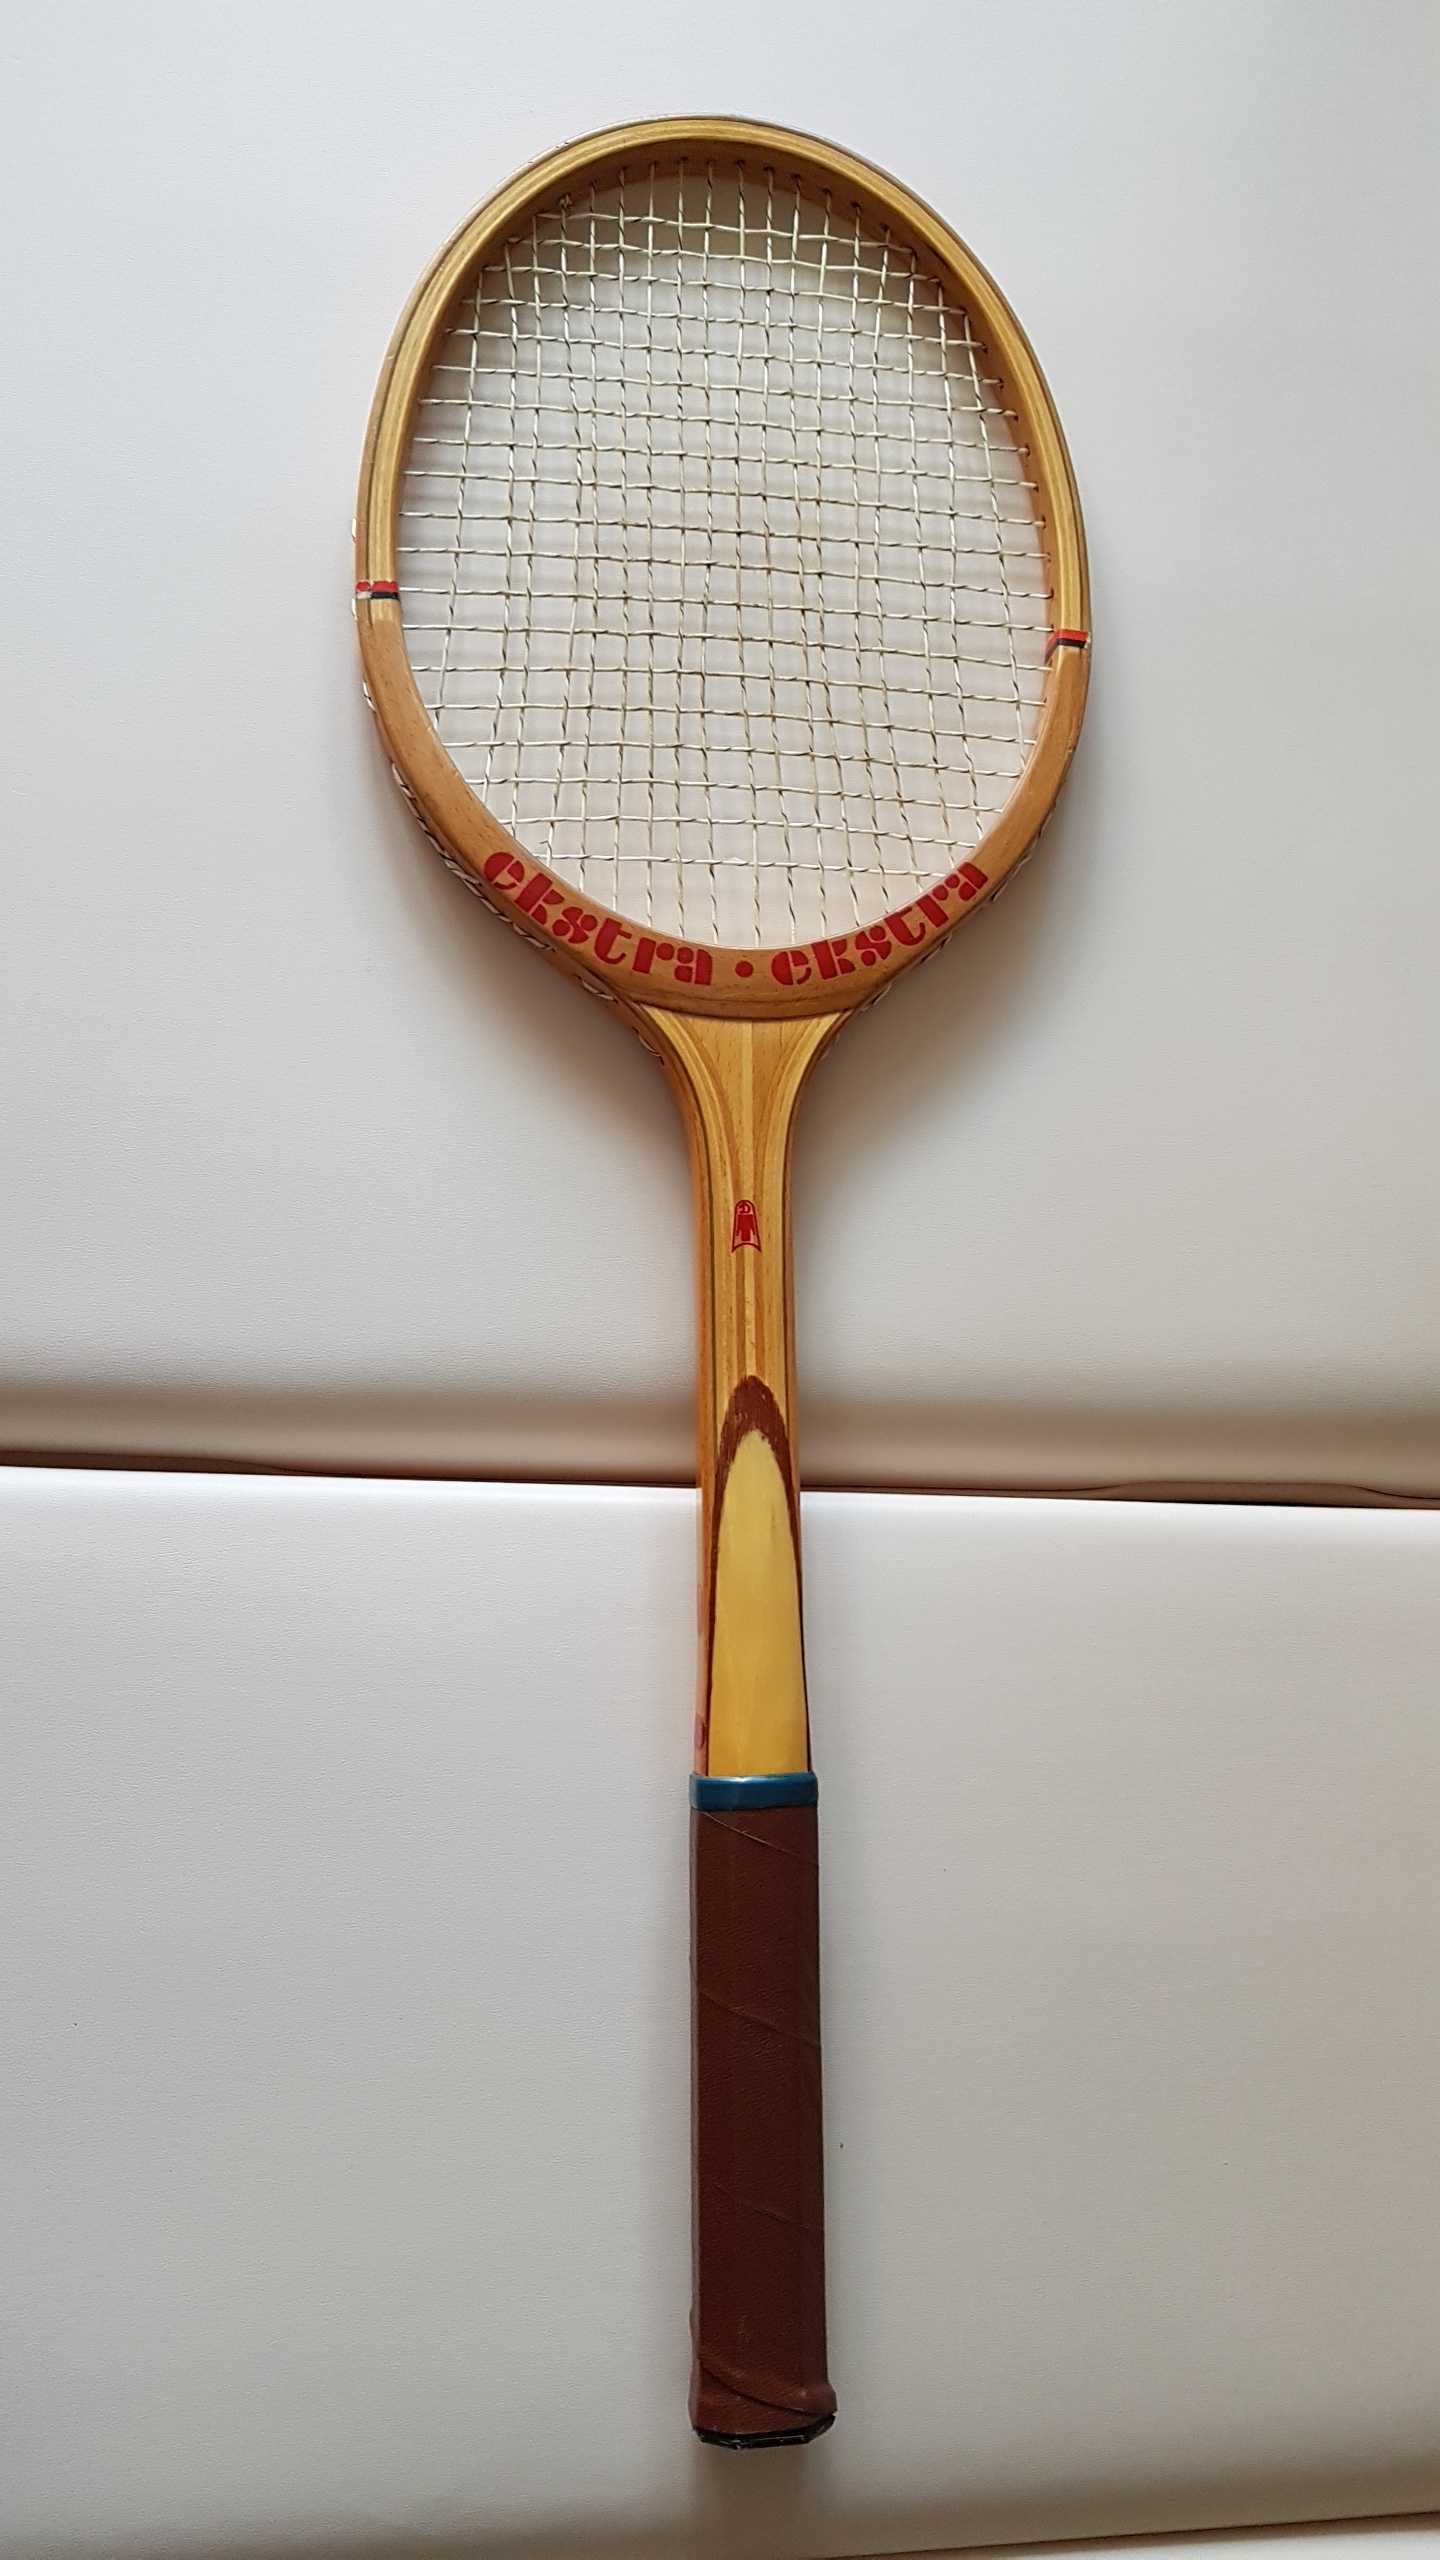 Drewniana rakieta tenisowa